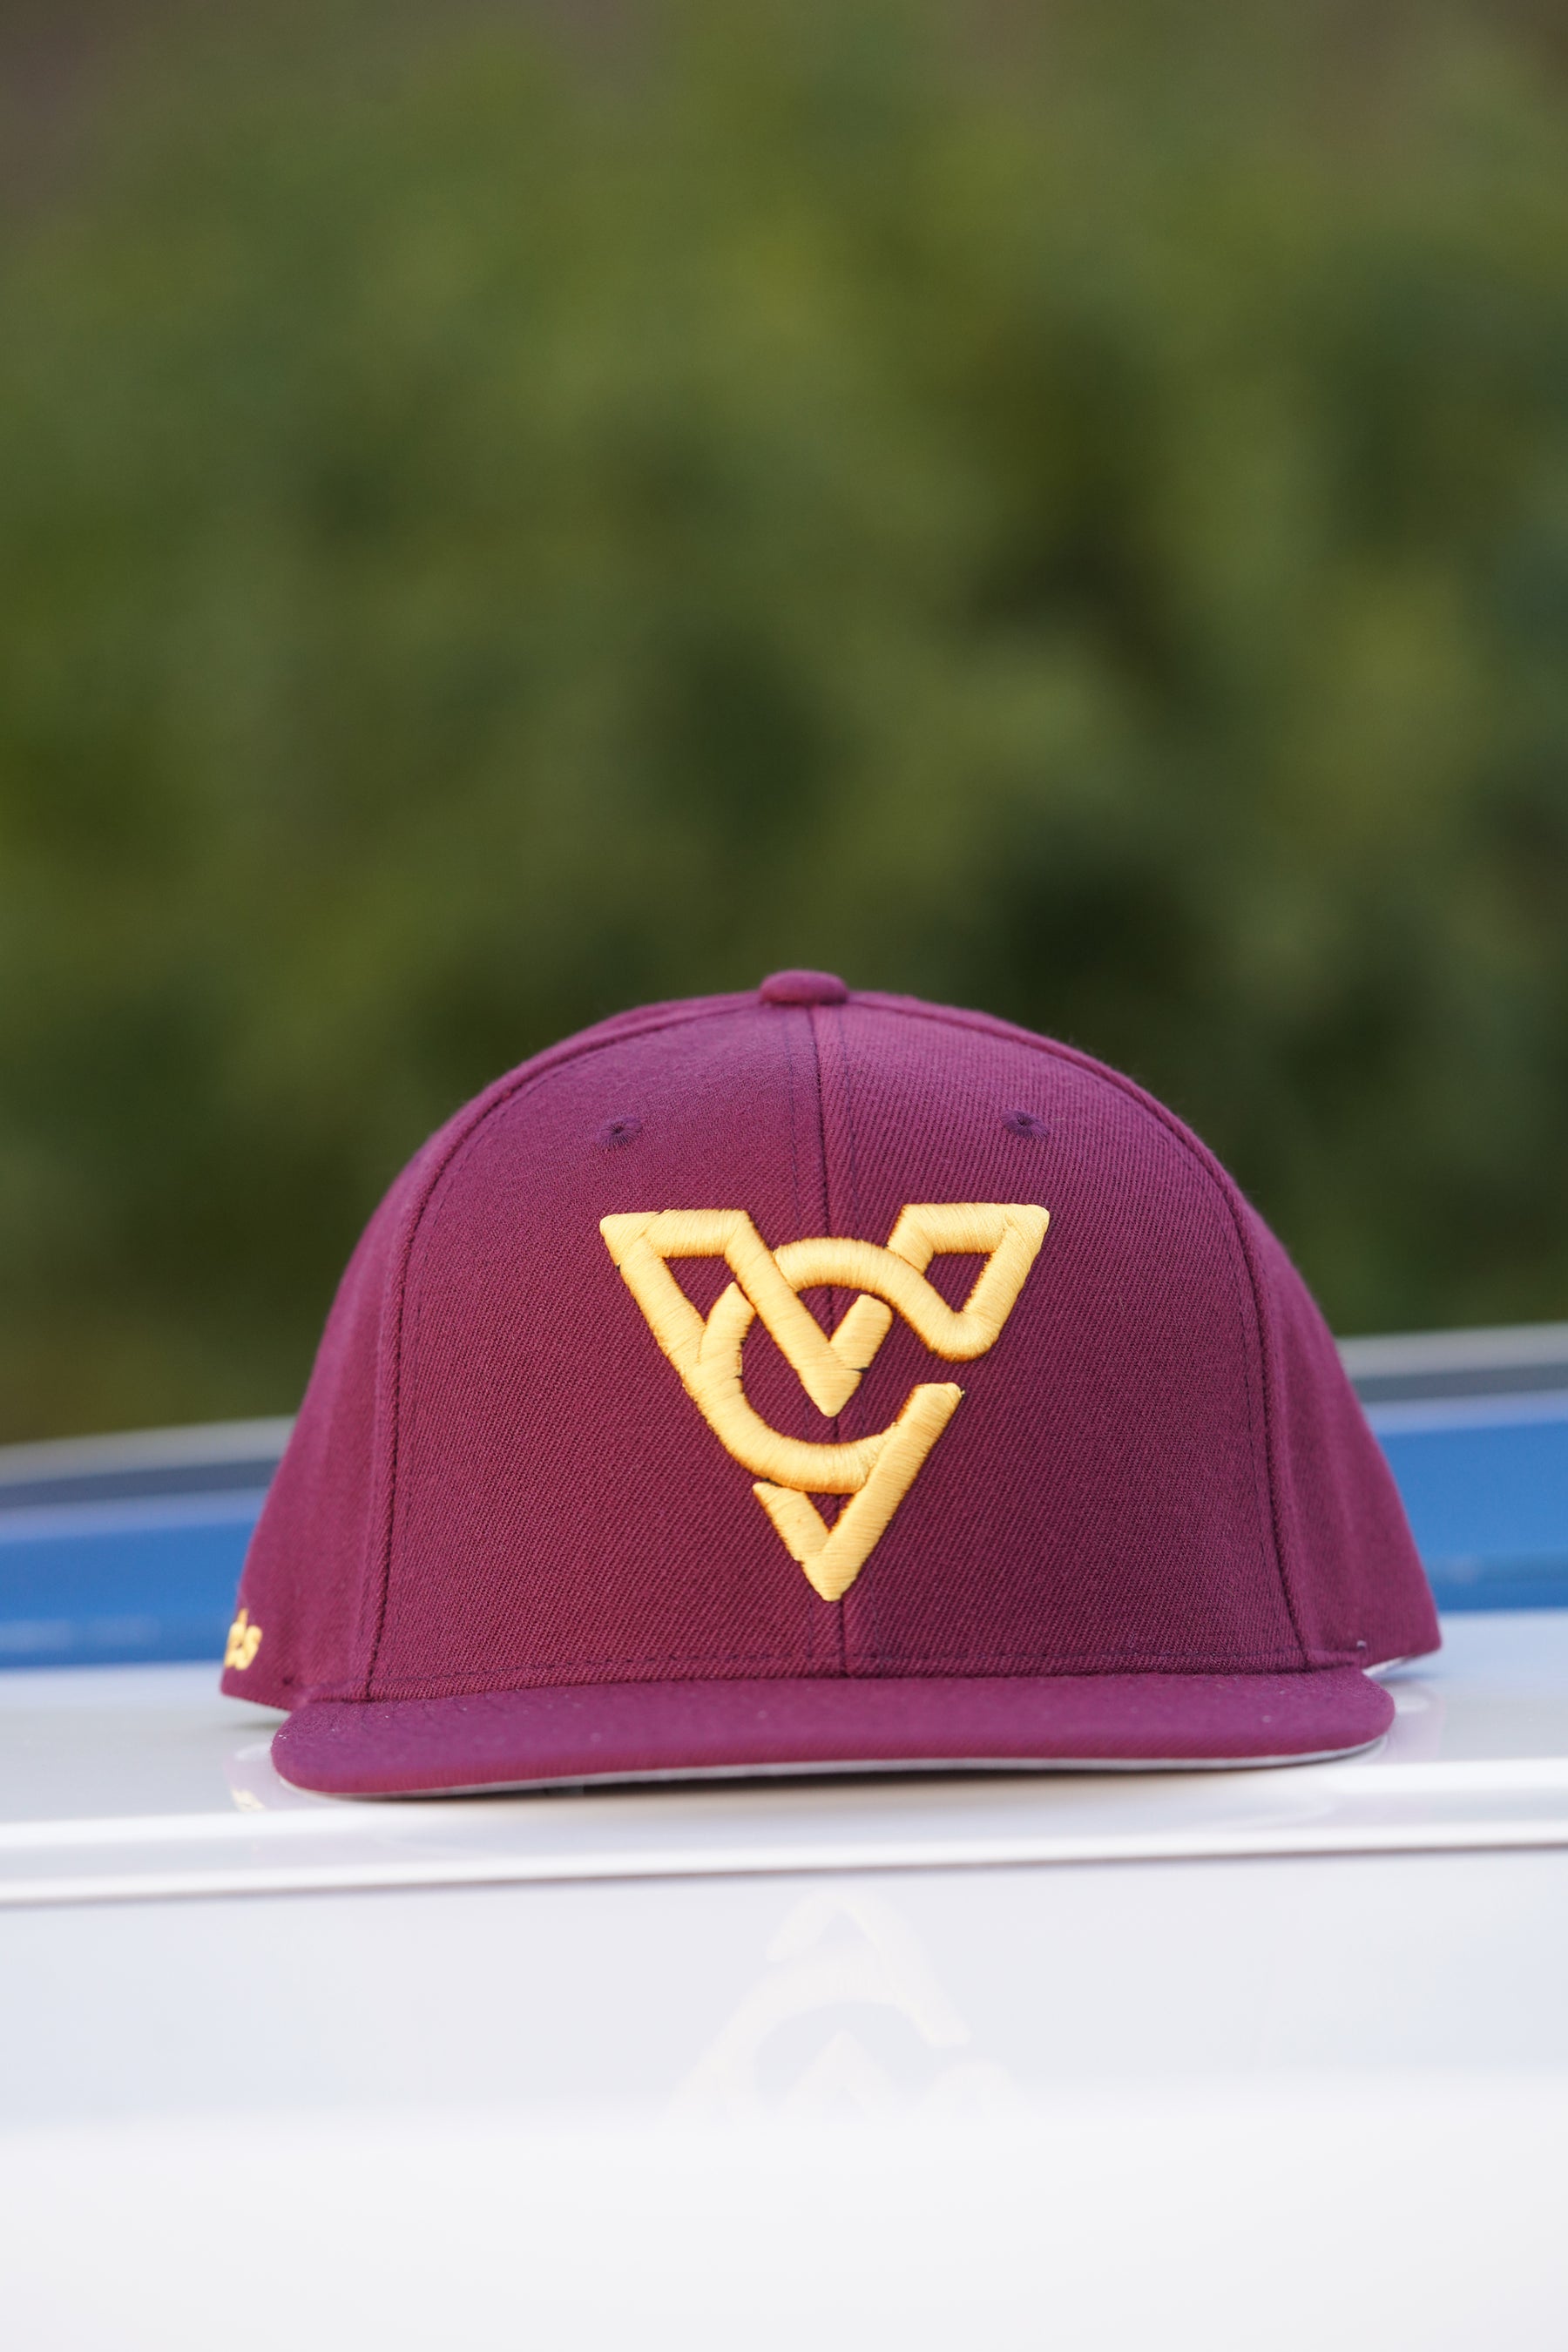 VC PUFF HAT (Maroon/Gold Puff)